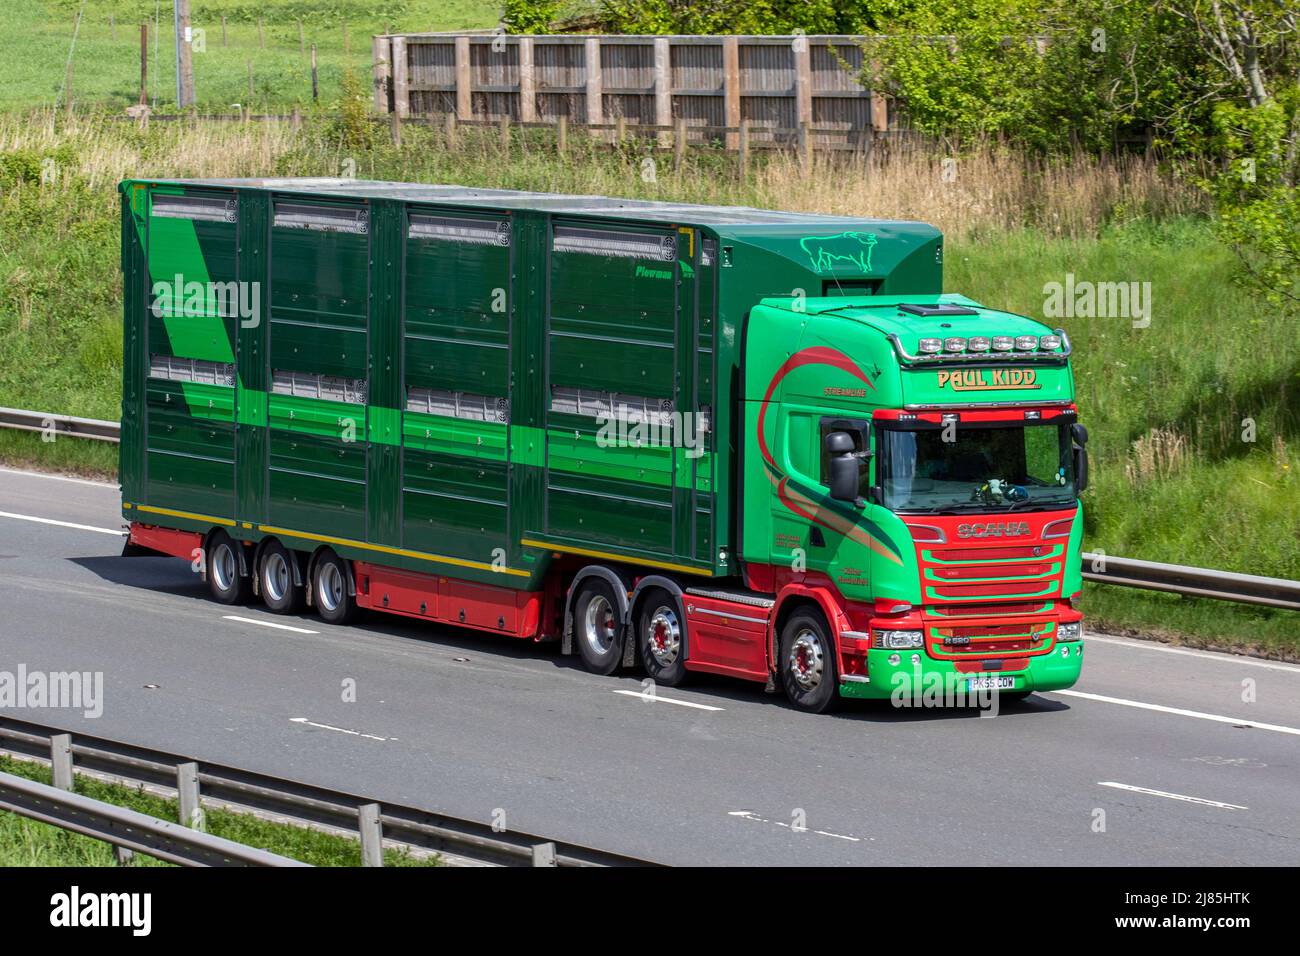 Paul Kidd Farm Animal Transport Plowman Trailer; Scania R 520 tractor Unit travelling on the M61 motorway, UK Stock Photo